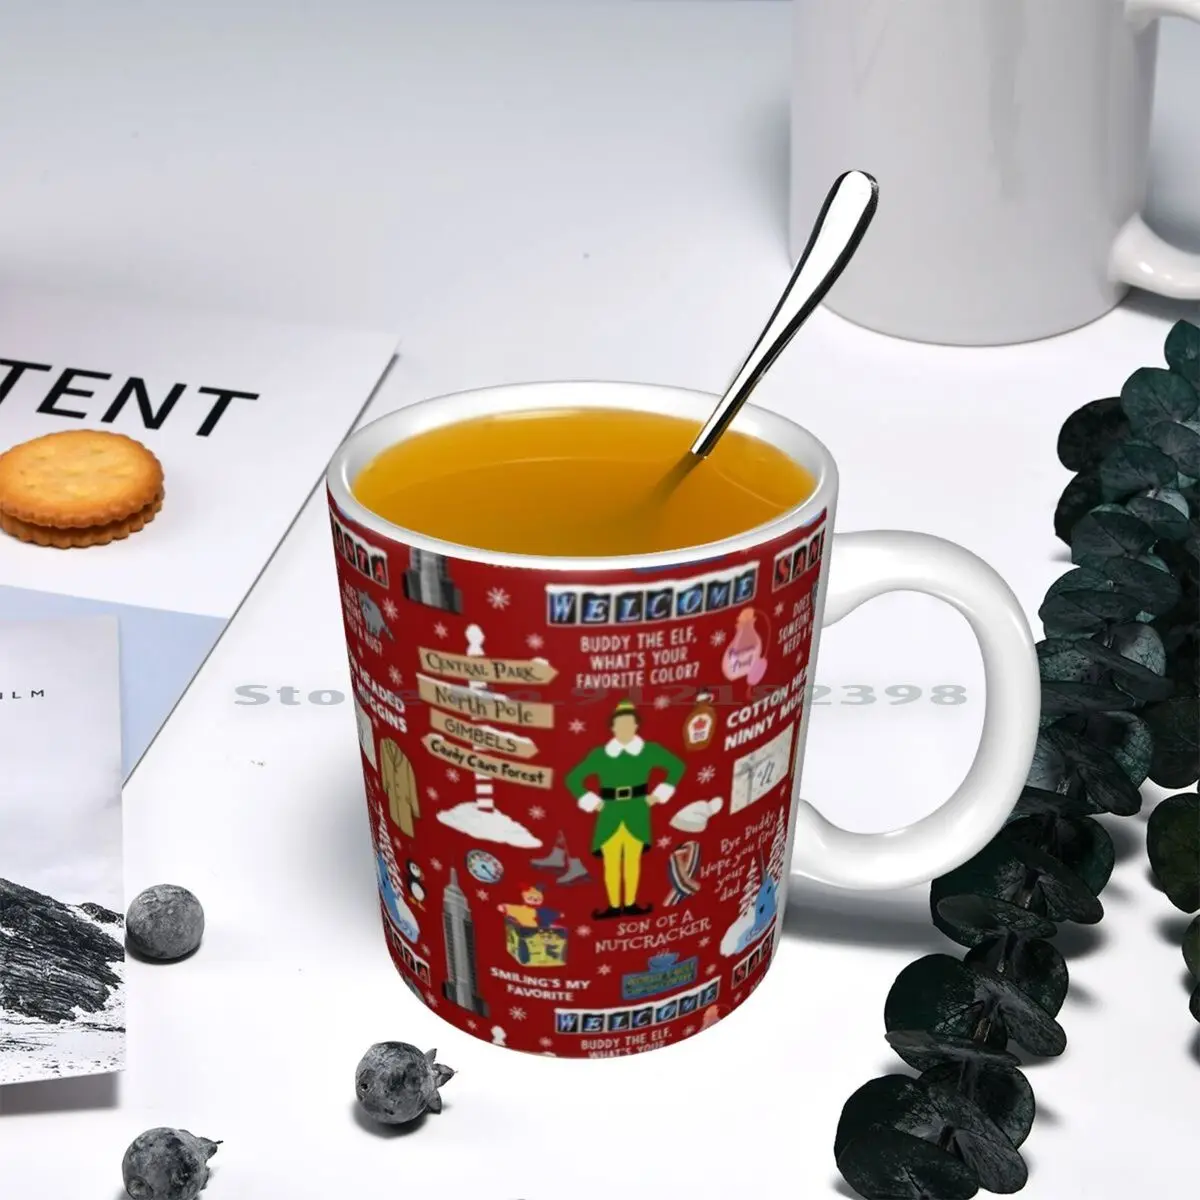 https://ae01.alicdn.com/kf/Ha79f3ecd2a384a0497536f56eb0806f8r/Buddy-The-Elf-Collage-Red-Background-Ceramic-Mugs-Coffee-Cups-Milk-Tea-Mug-Elf-Buddy-The.jpg